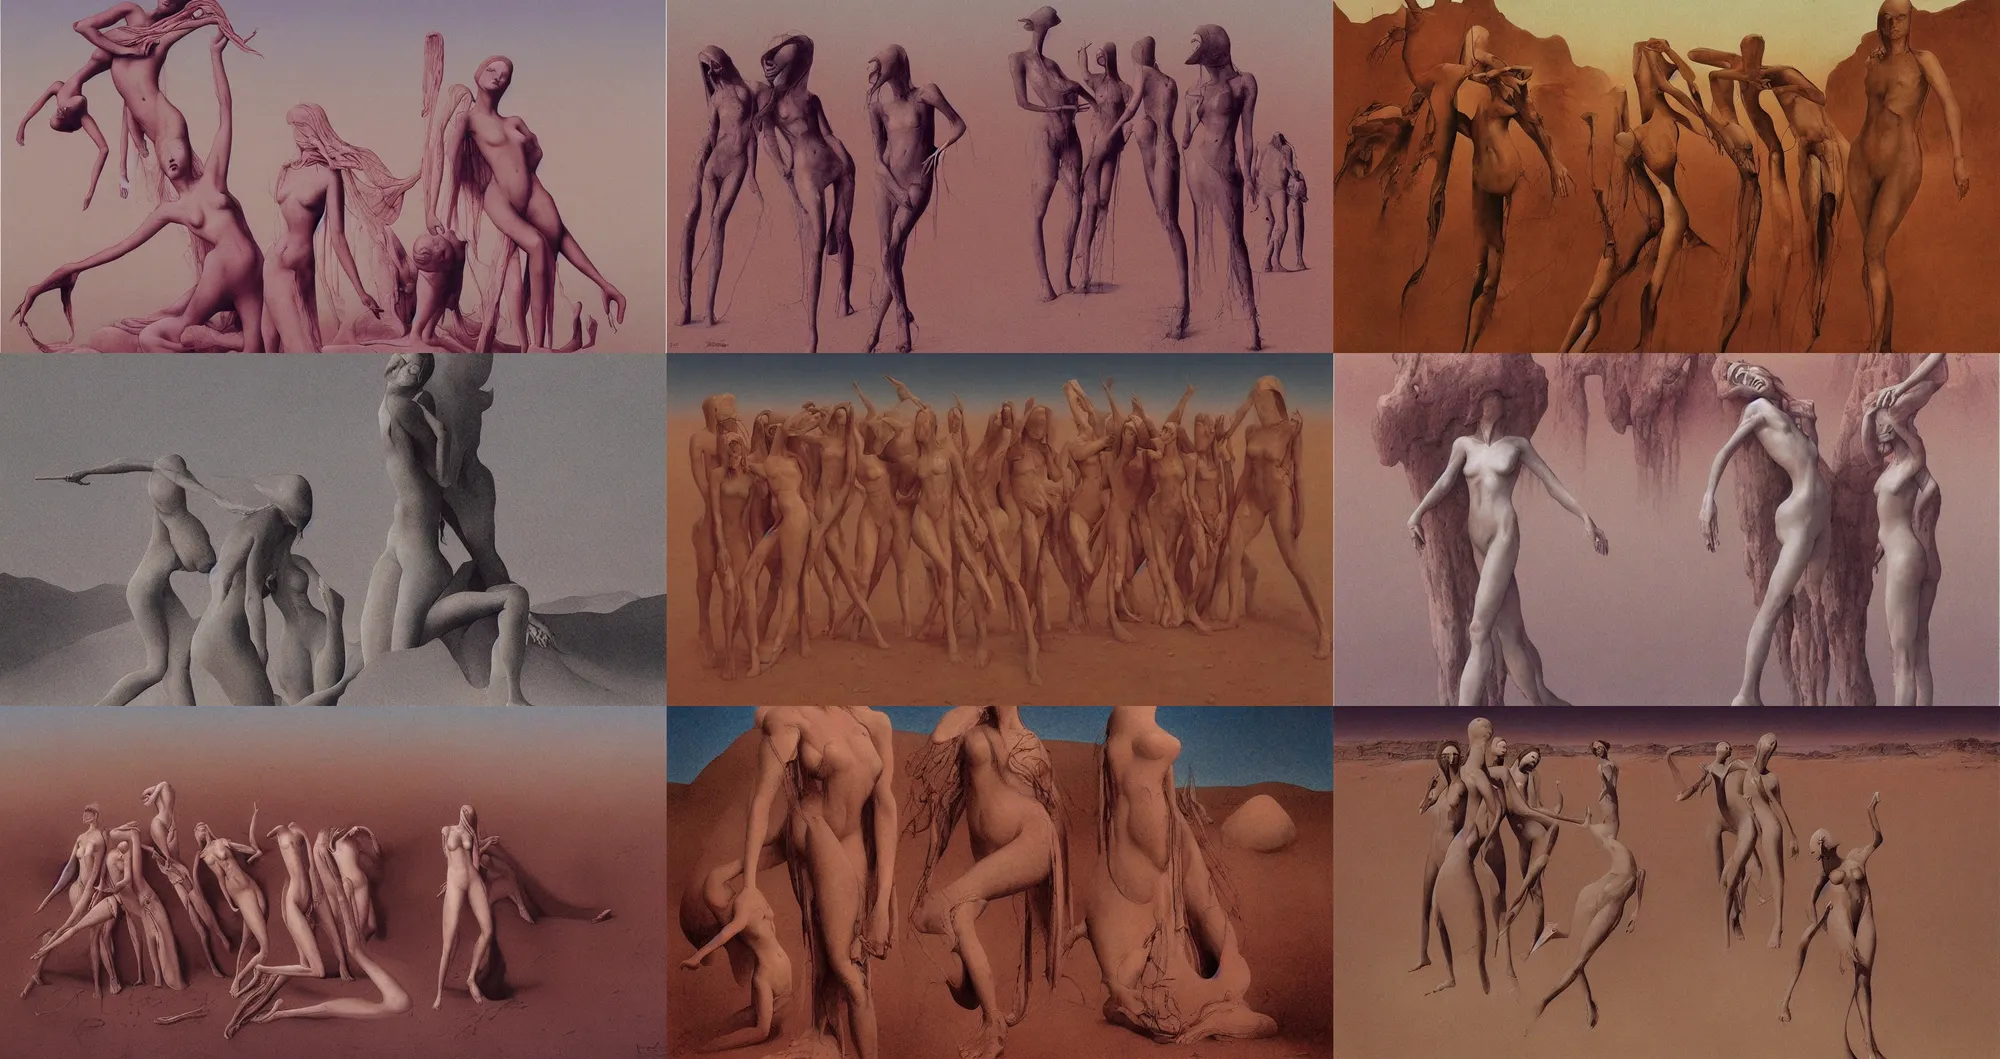 Prompt: photo in art deco style of female bodies in a desert wayne barlowe and beksinski